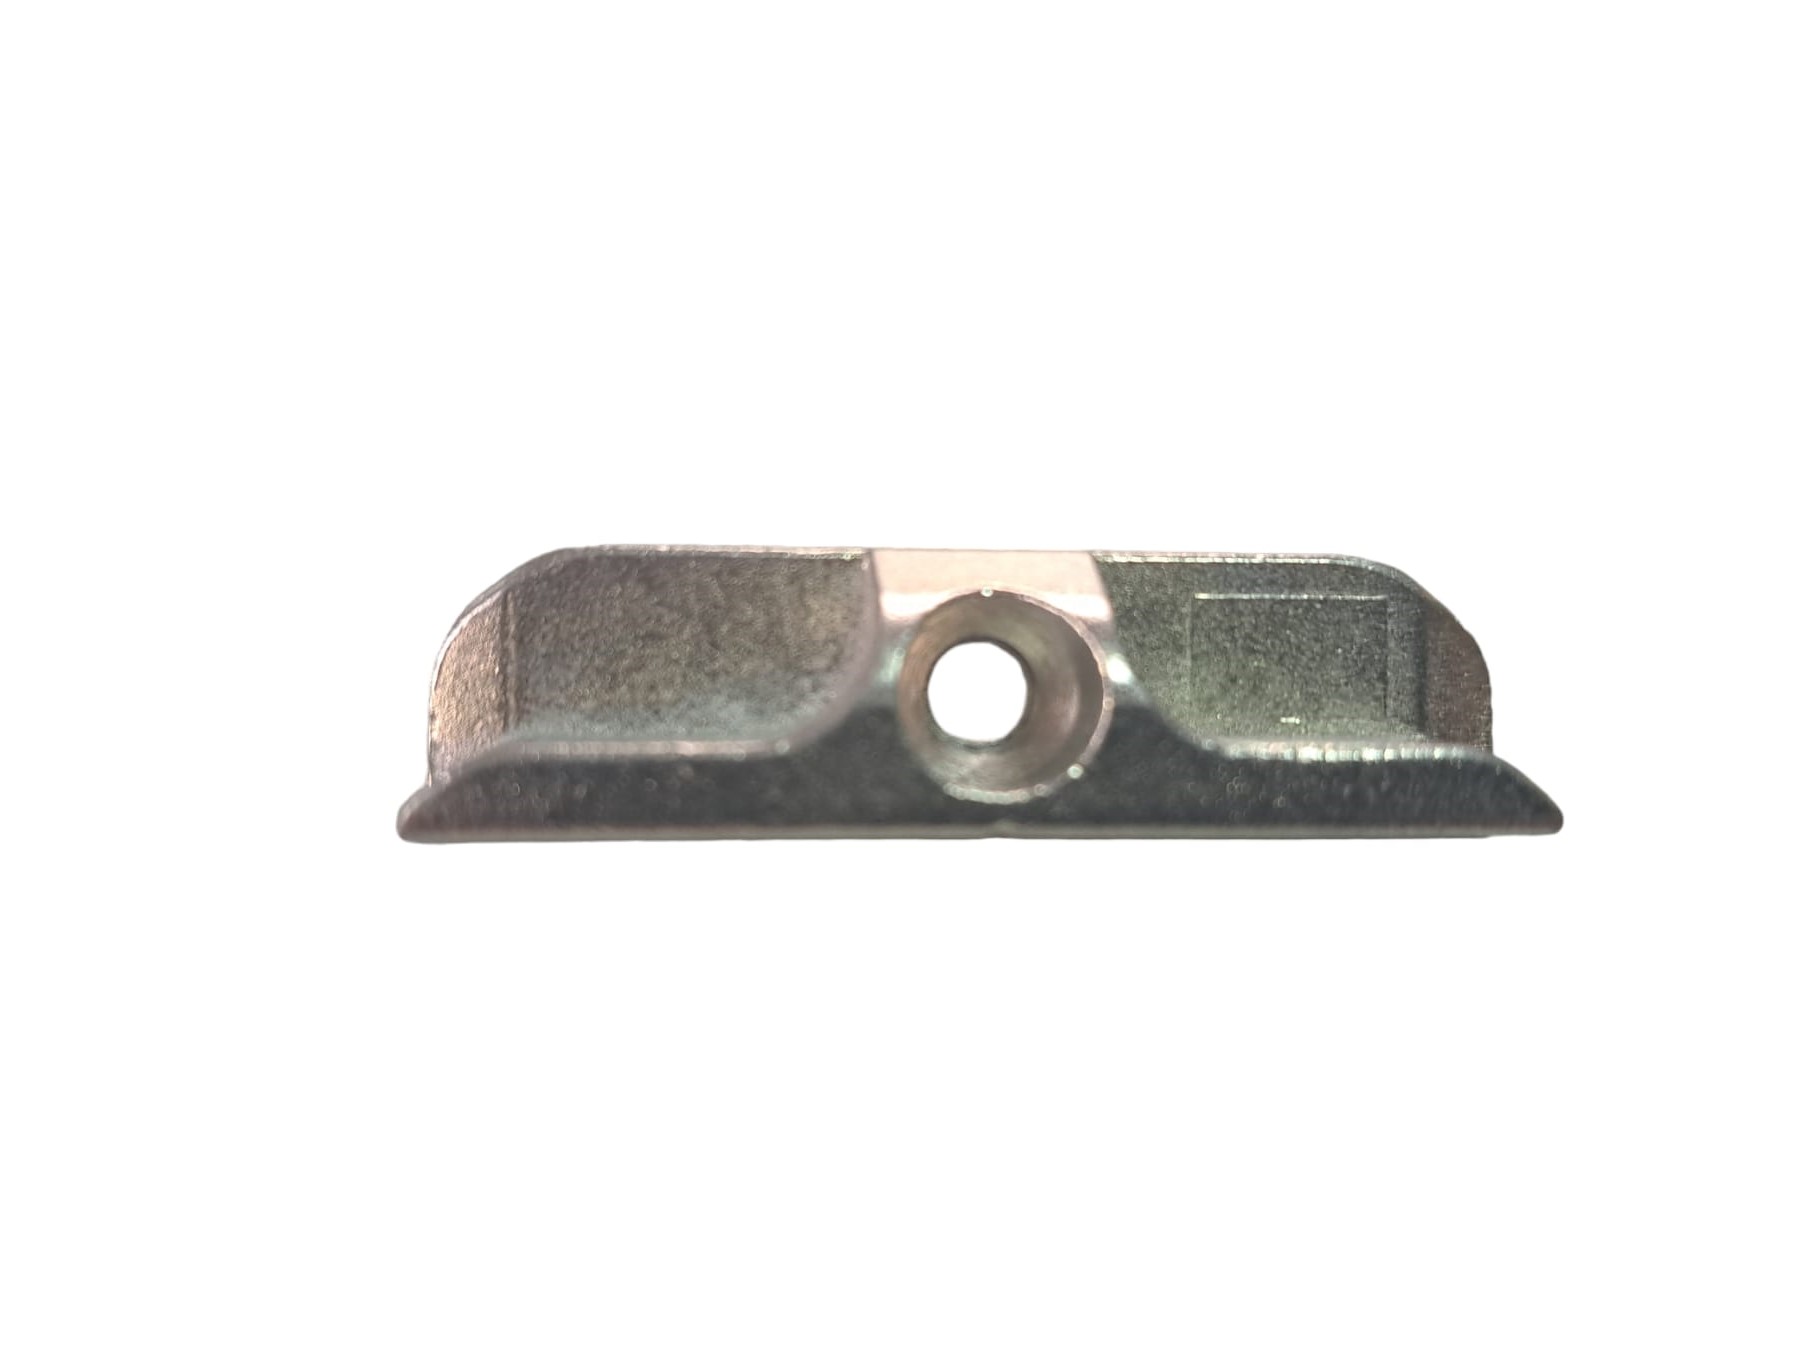 Placuta-inchidere-toc-Kale-tamplarie-PVC-falt-profil-9mm-lux-pvc.jpg